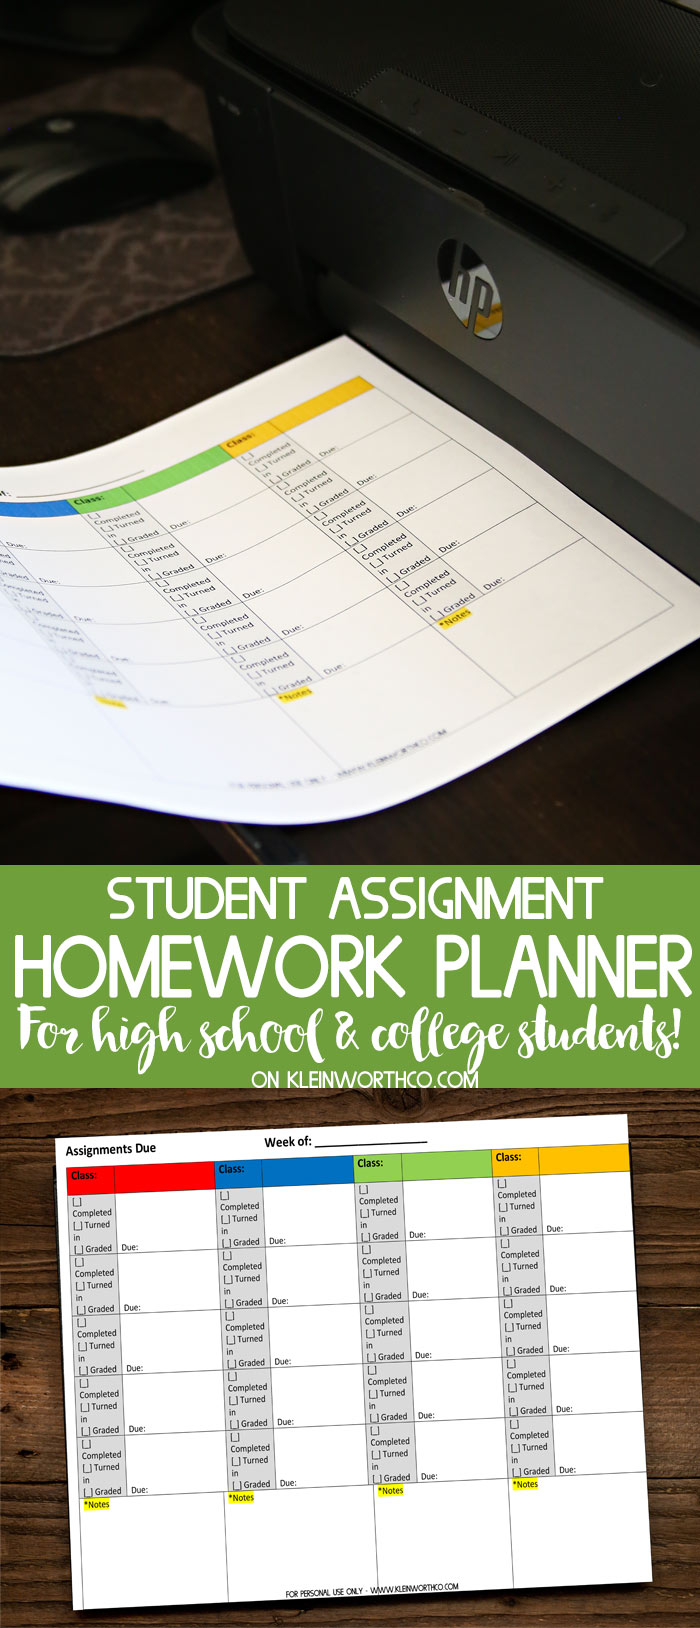 Student Assignment Homework Planner Printable Kleinworth